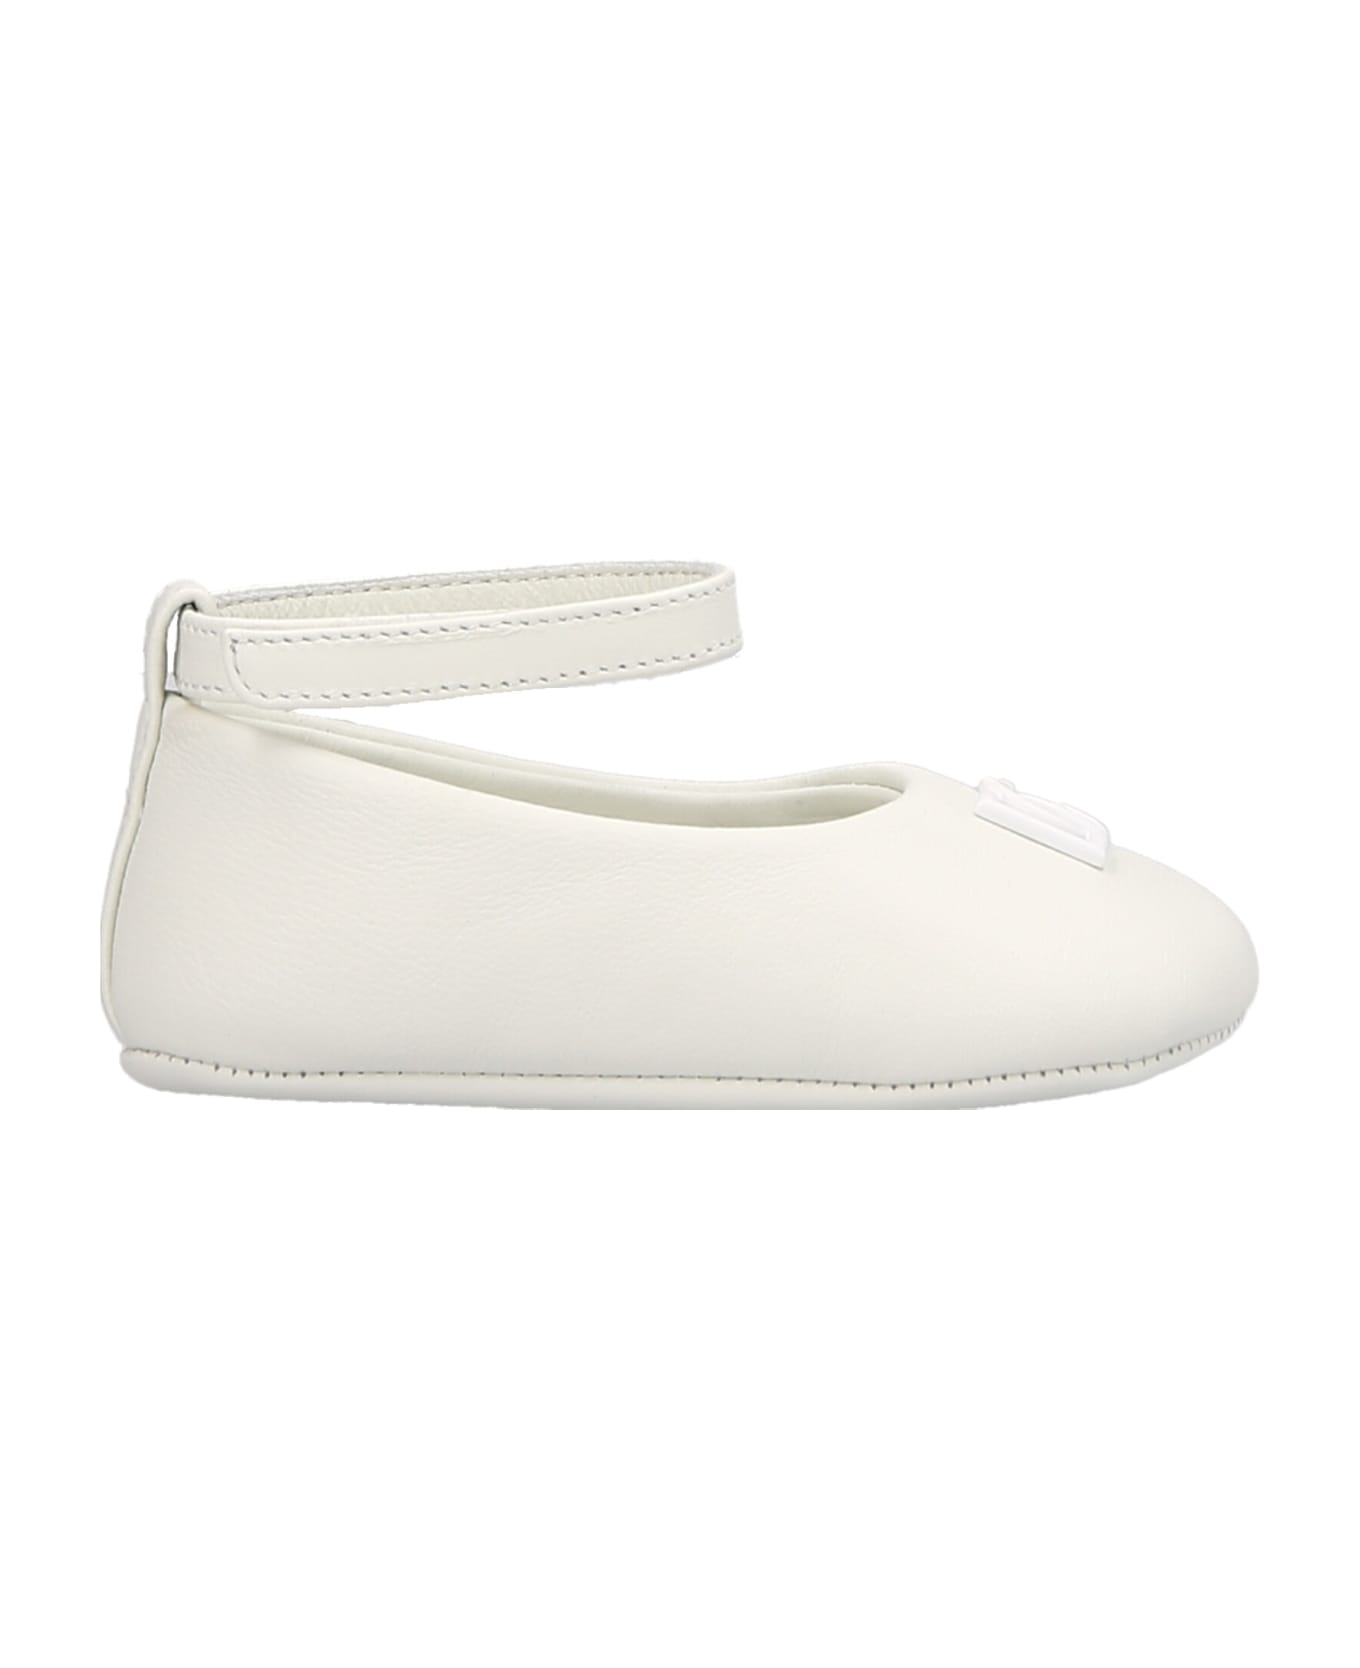 Dolce & Gabbana Strap Ballet Flats - White